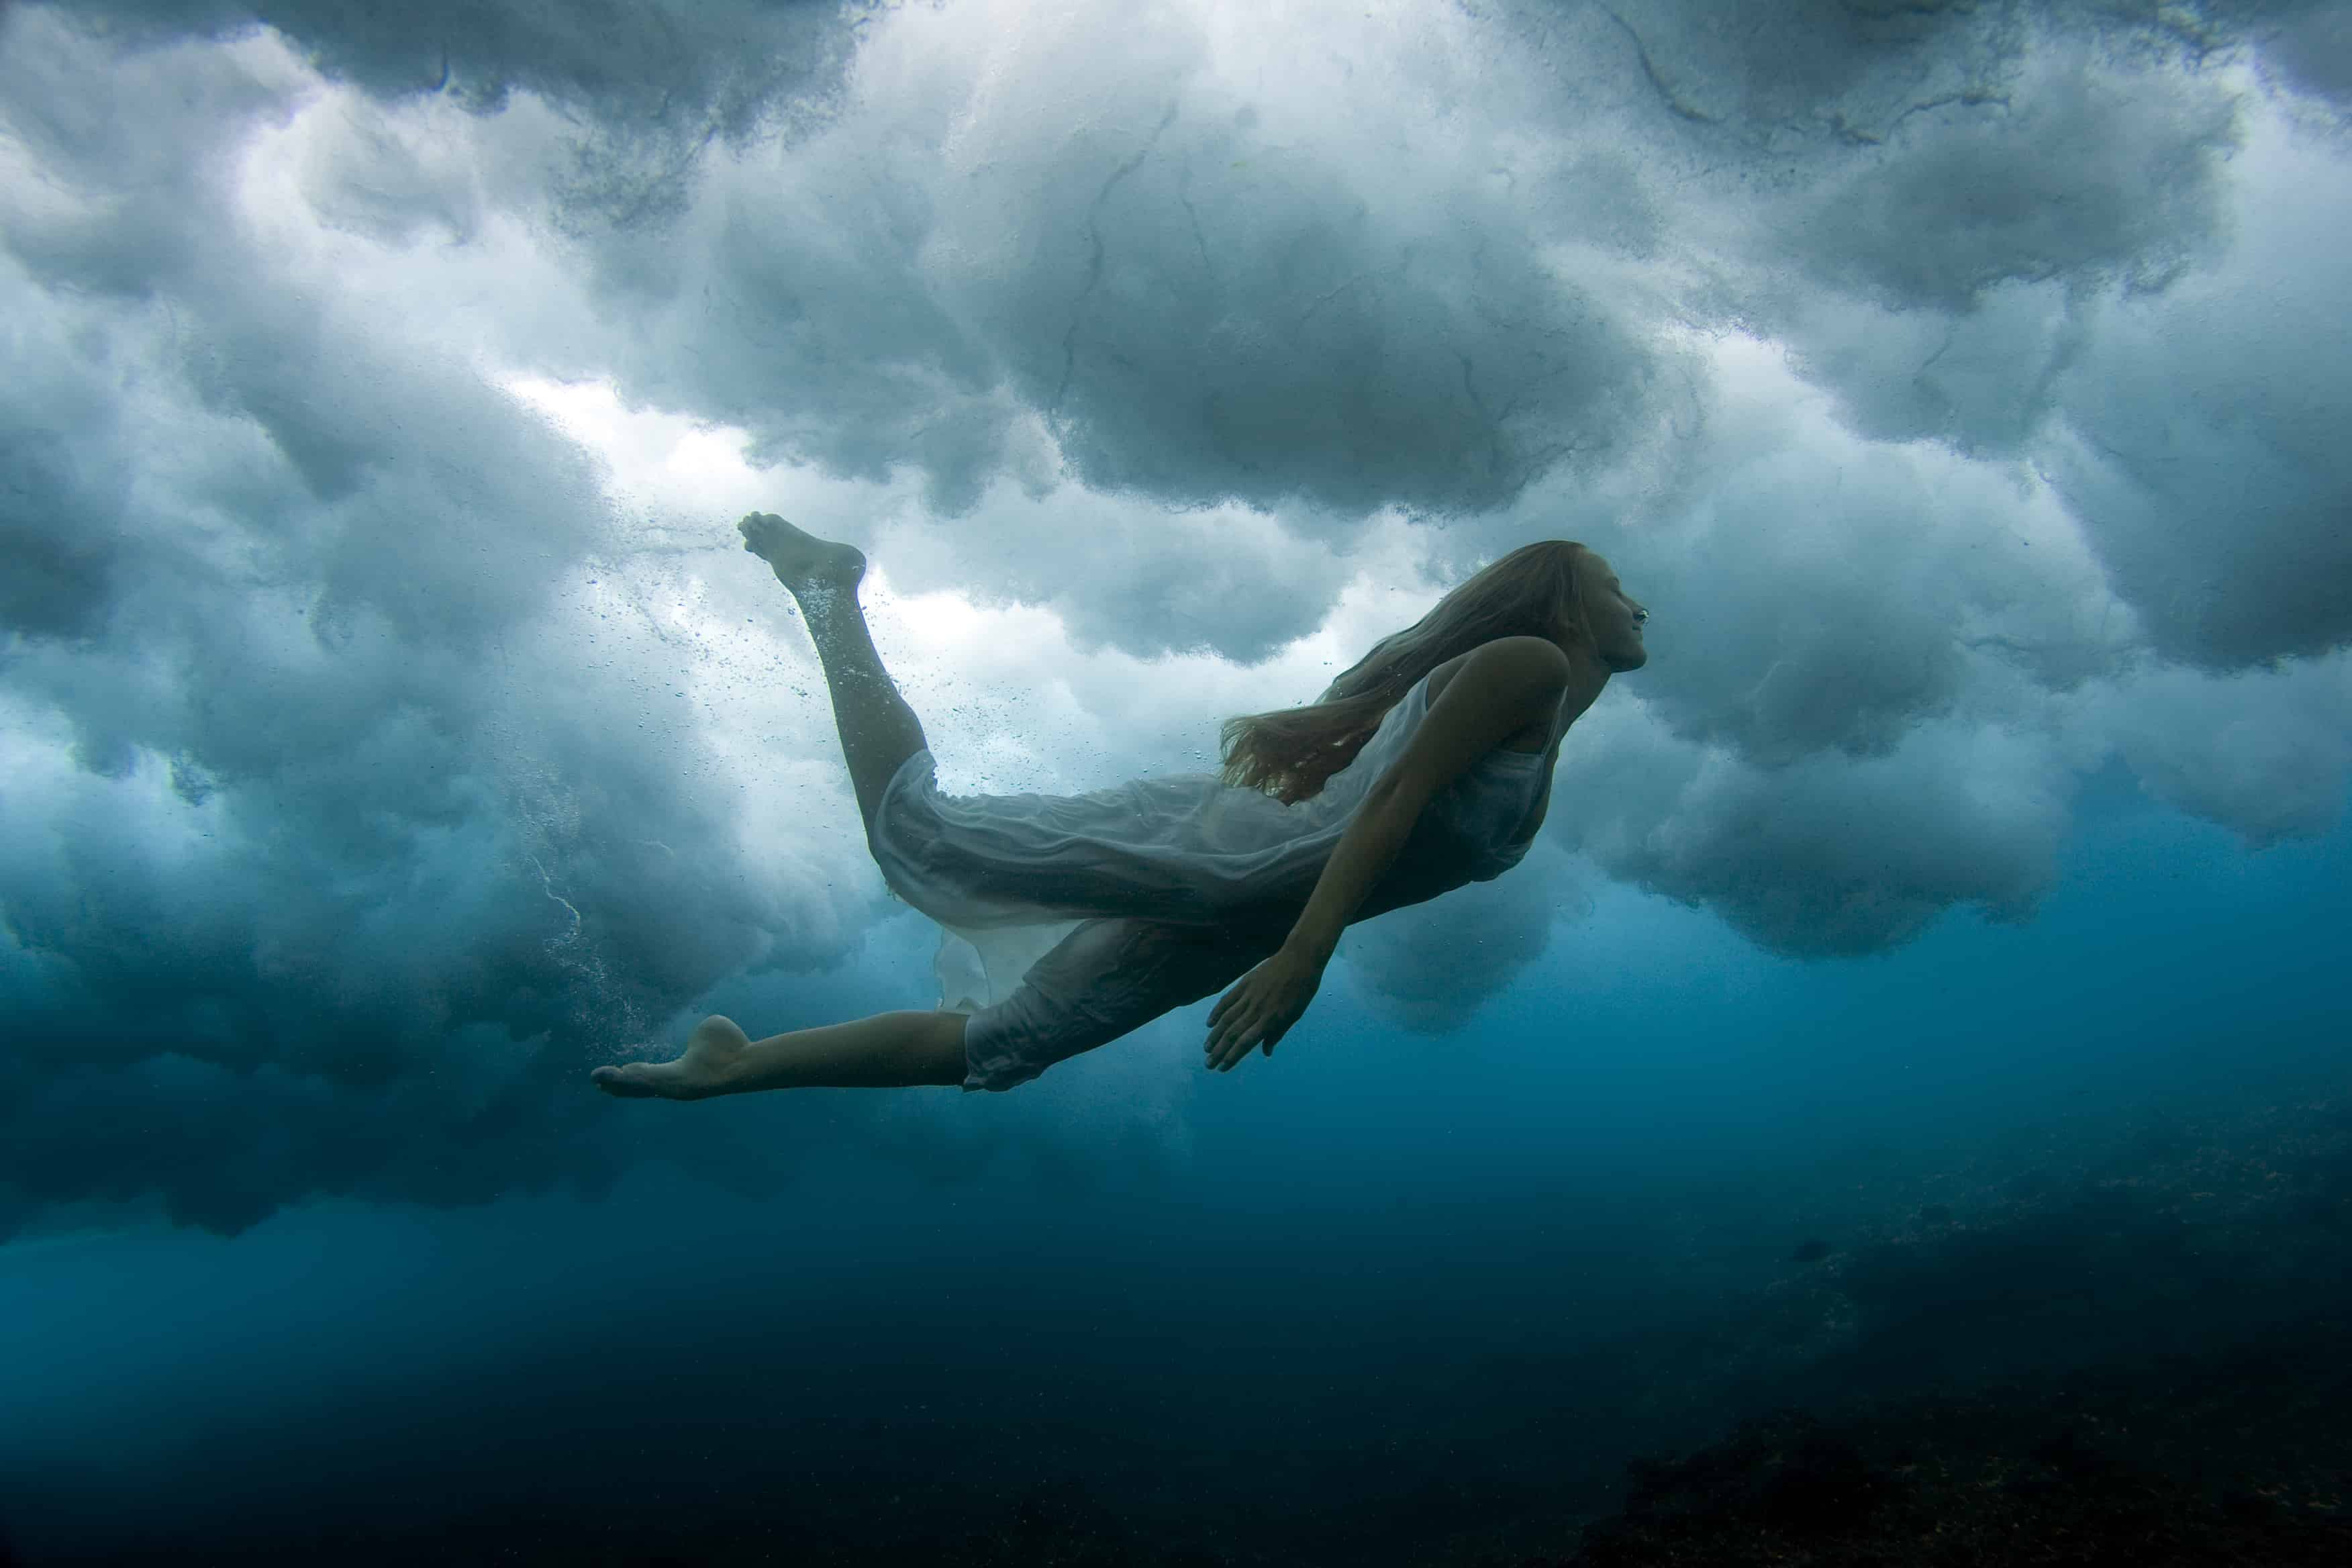 Bodies of Water by Erik Aeder